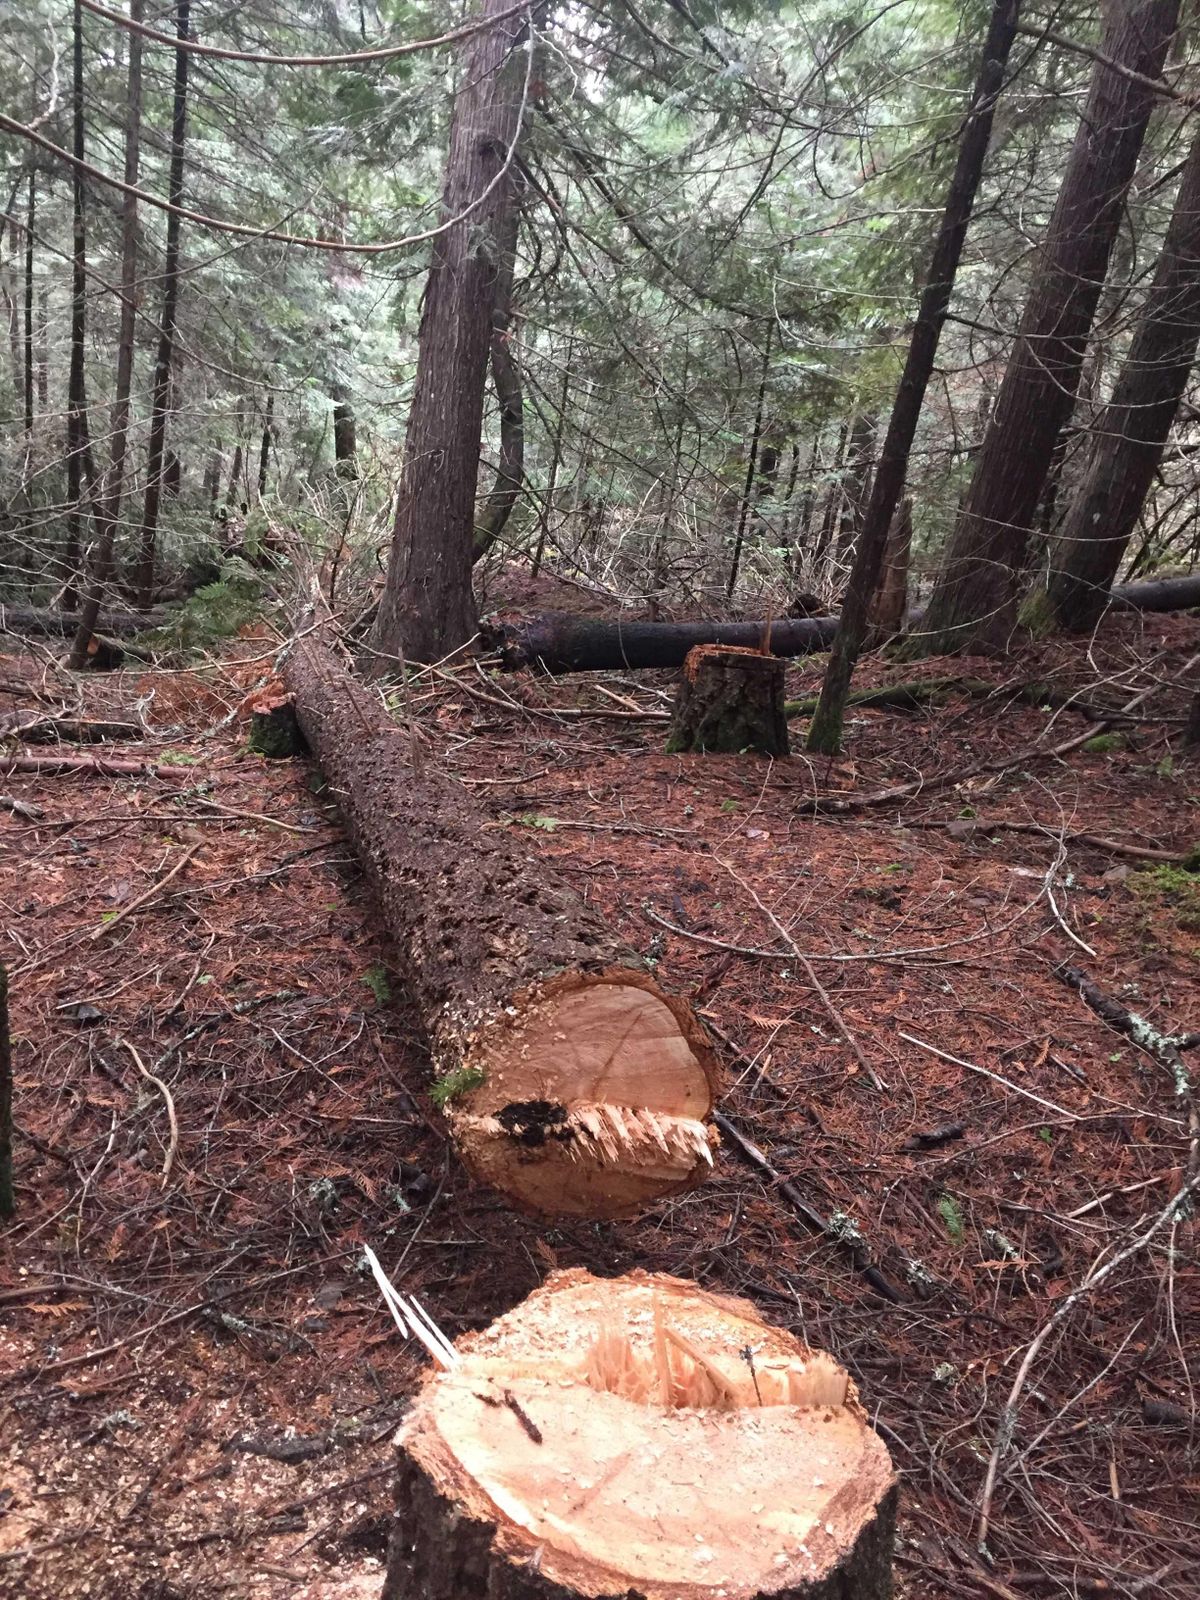 About $5,000 worth of timber was illegally harvested near Pinehurst, Idaho, according to the Bureau of Land Management. (Photo courtesy of the Bureau of Land Management.)